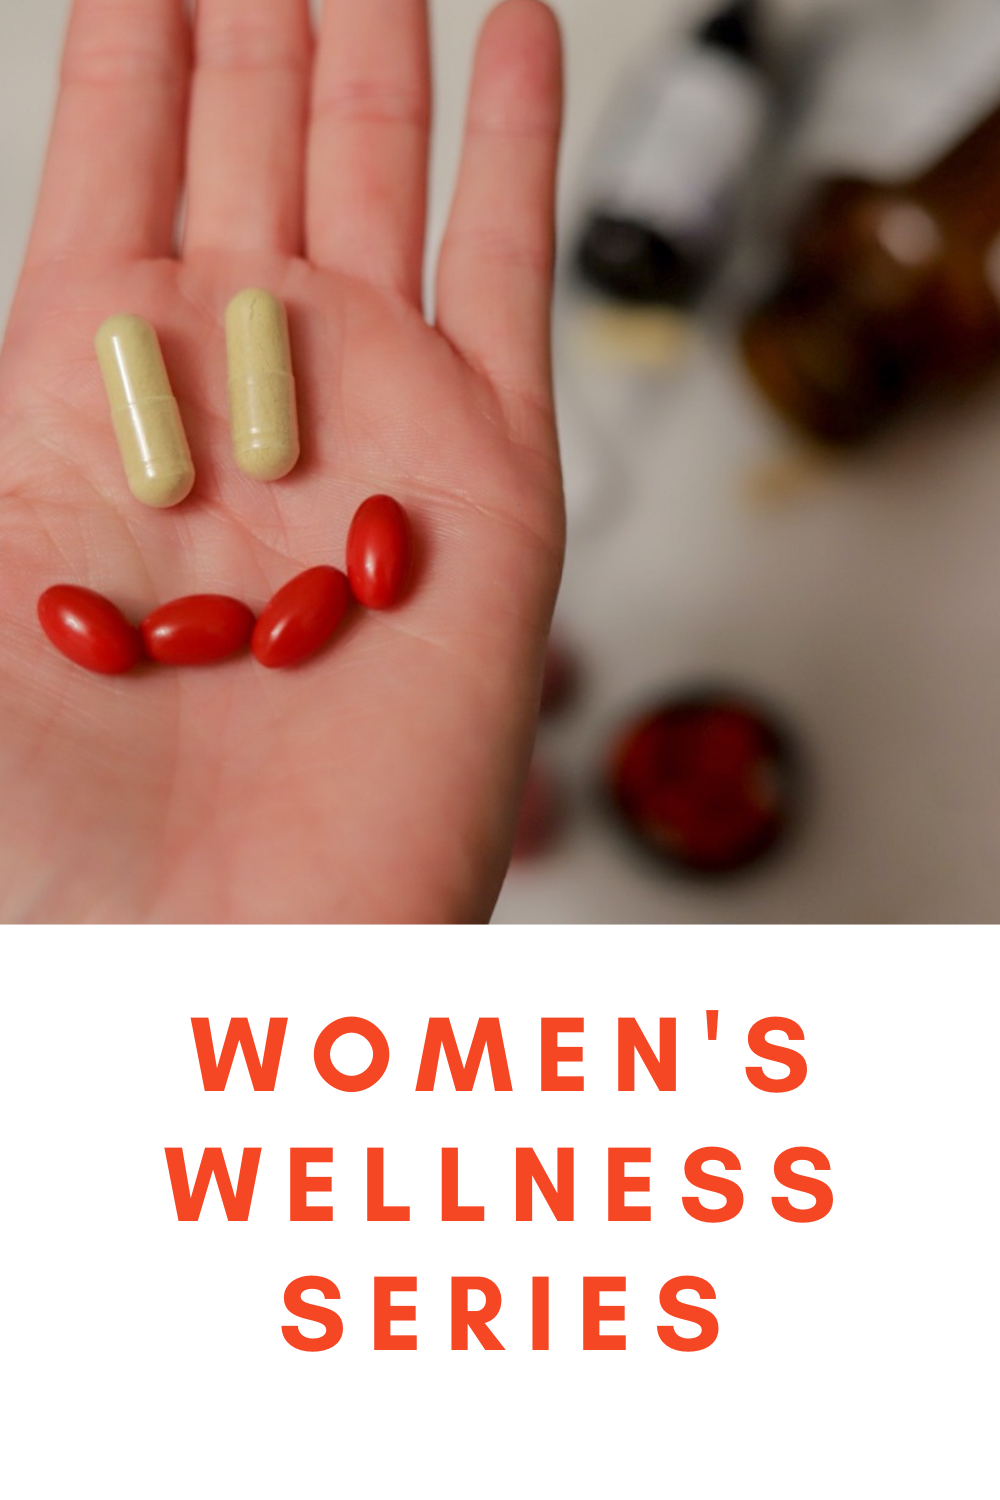 women's wellness series, lments of style, birth control, la blogger, supplements, taboo women's topics